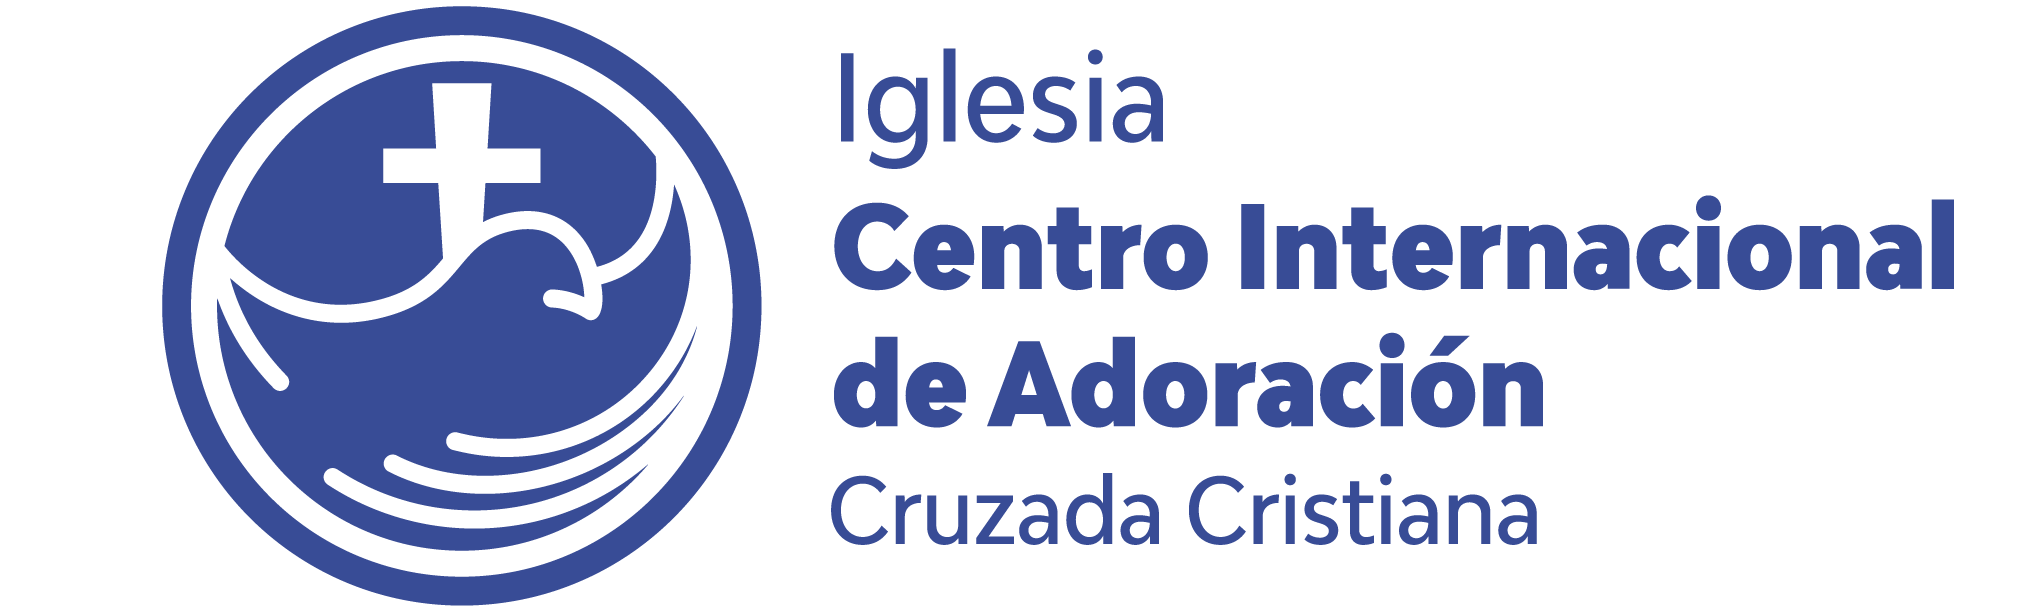 Centro Internacional de Adoracion Cruzada Cristiana